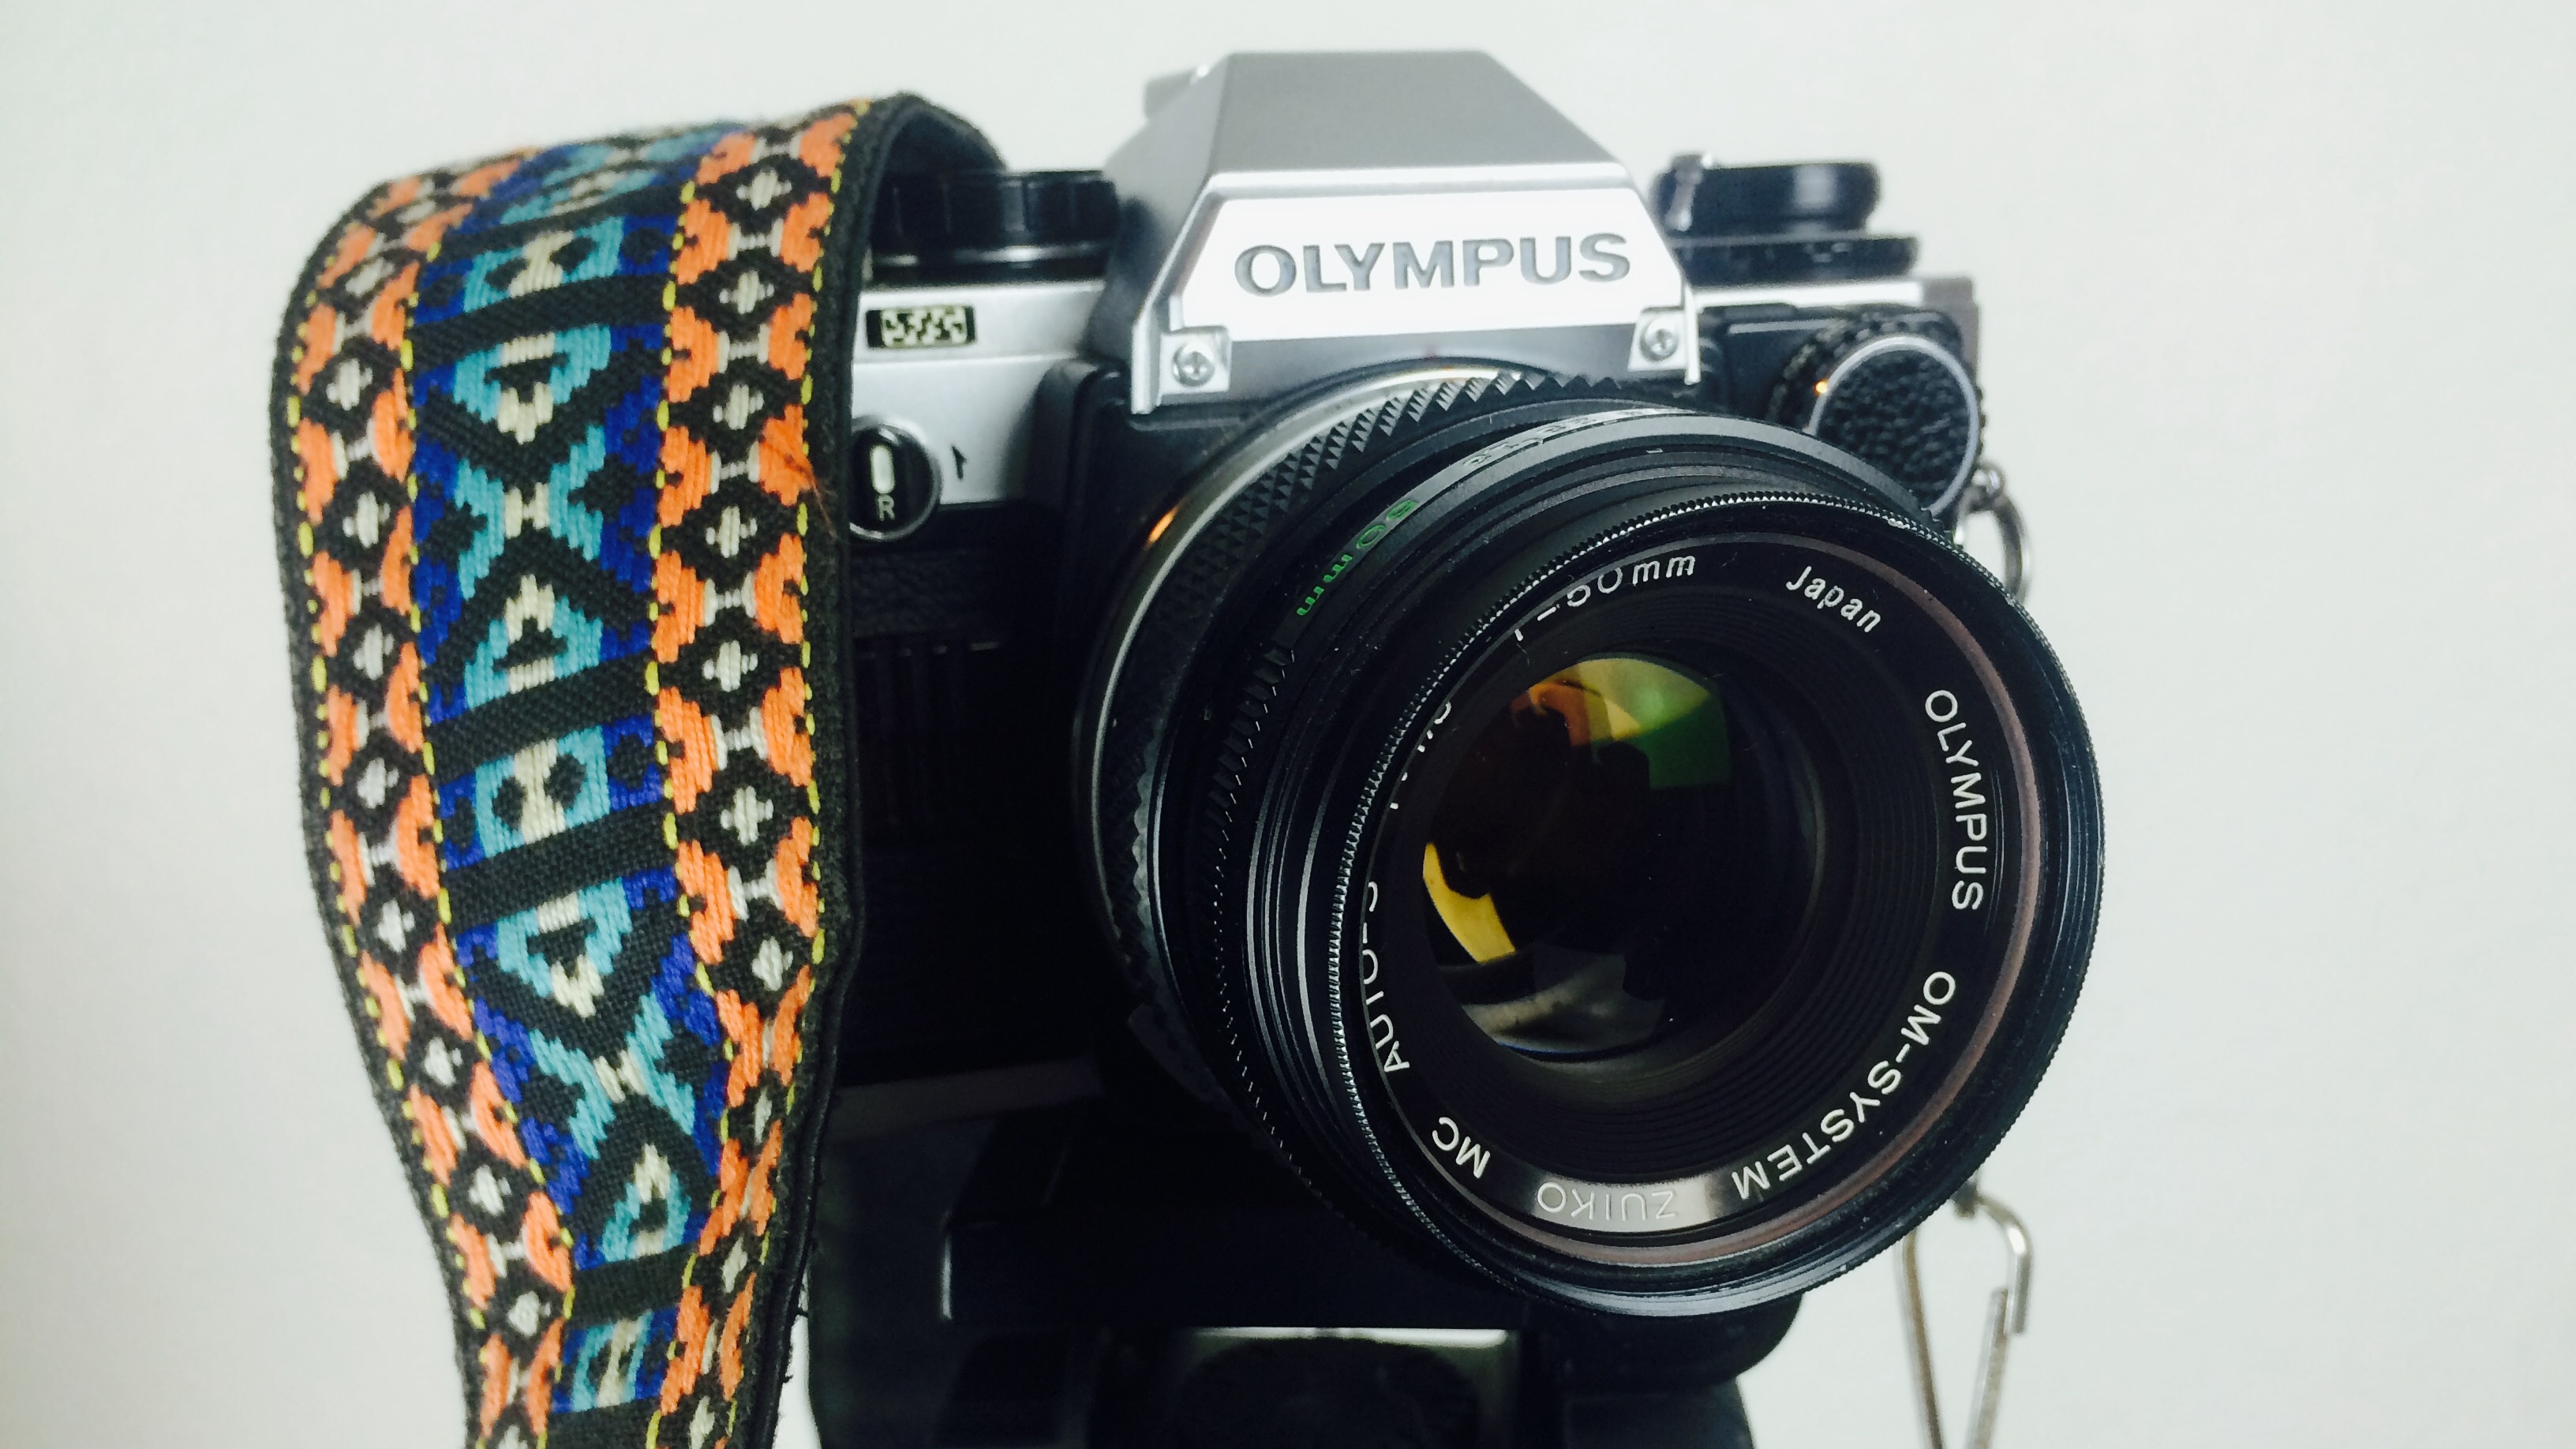 black and silver olympus dslr camera